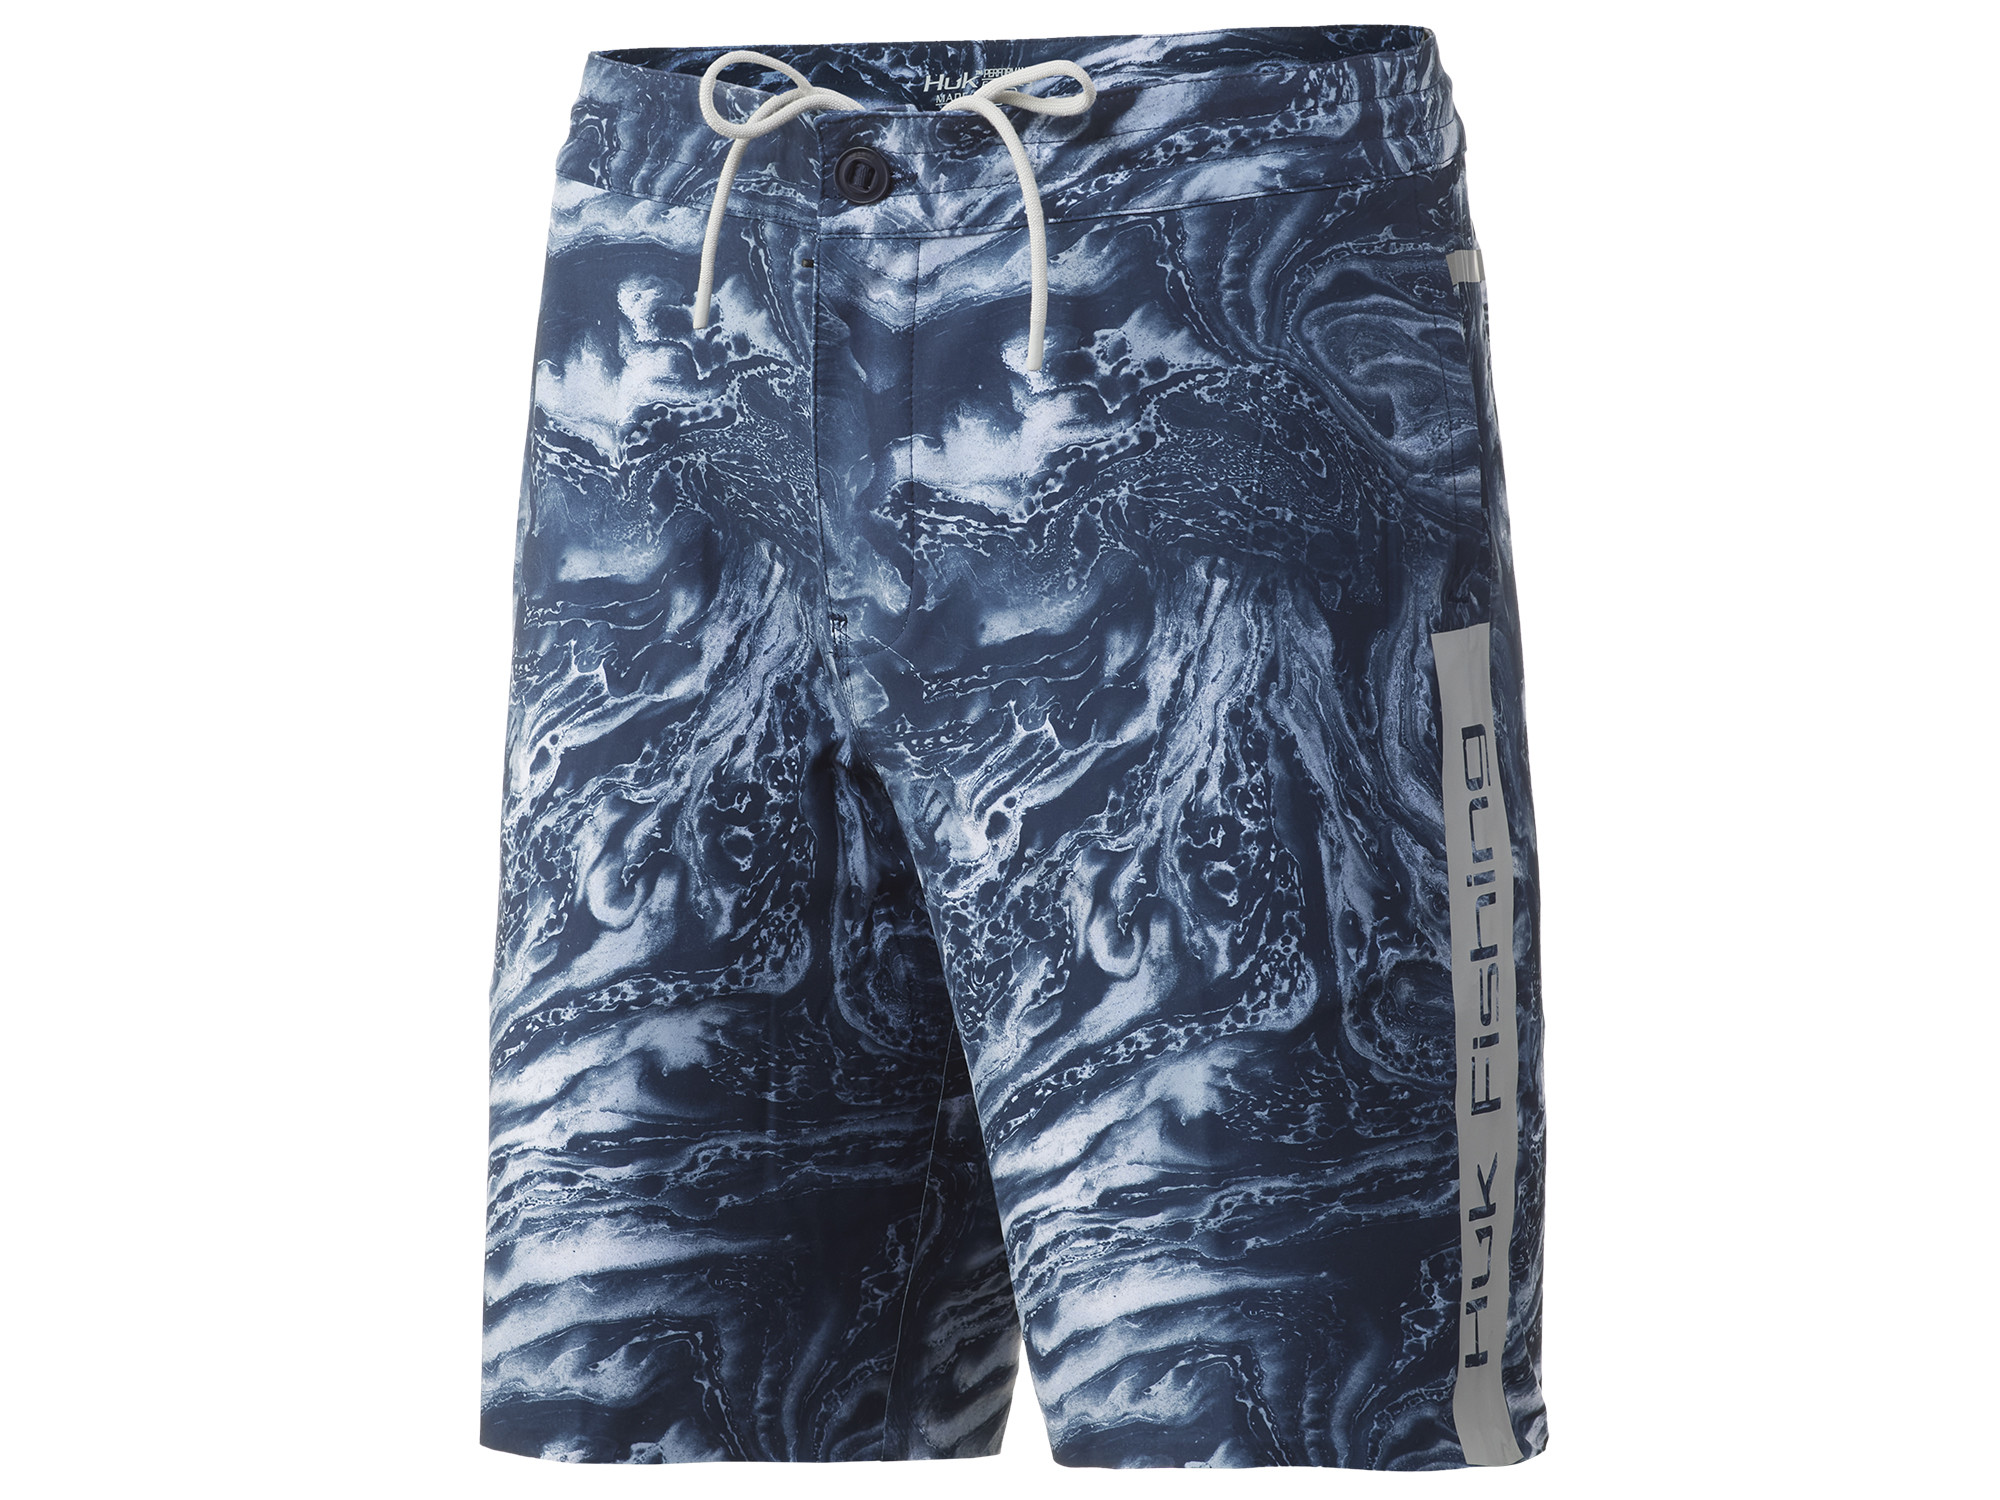 Huk Men's Pursuit Fishing Shorts - Titanium Blue - XL - Titanium Blue XL